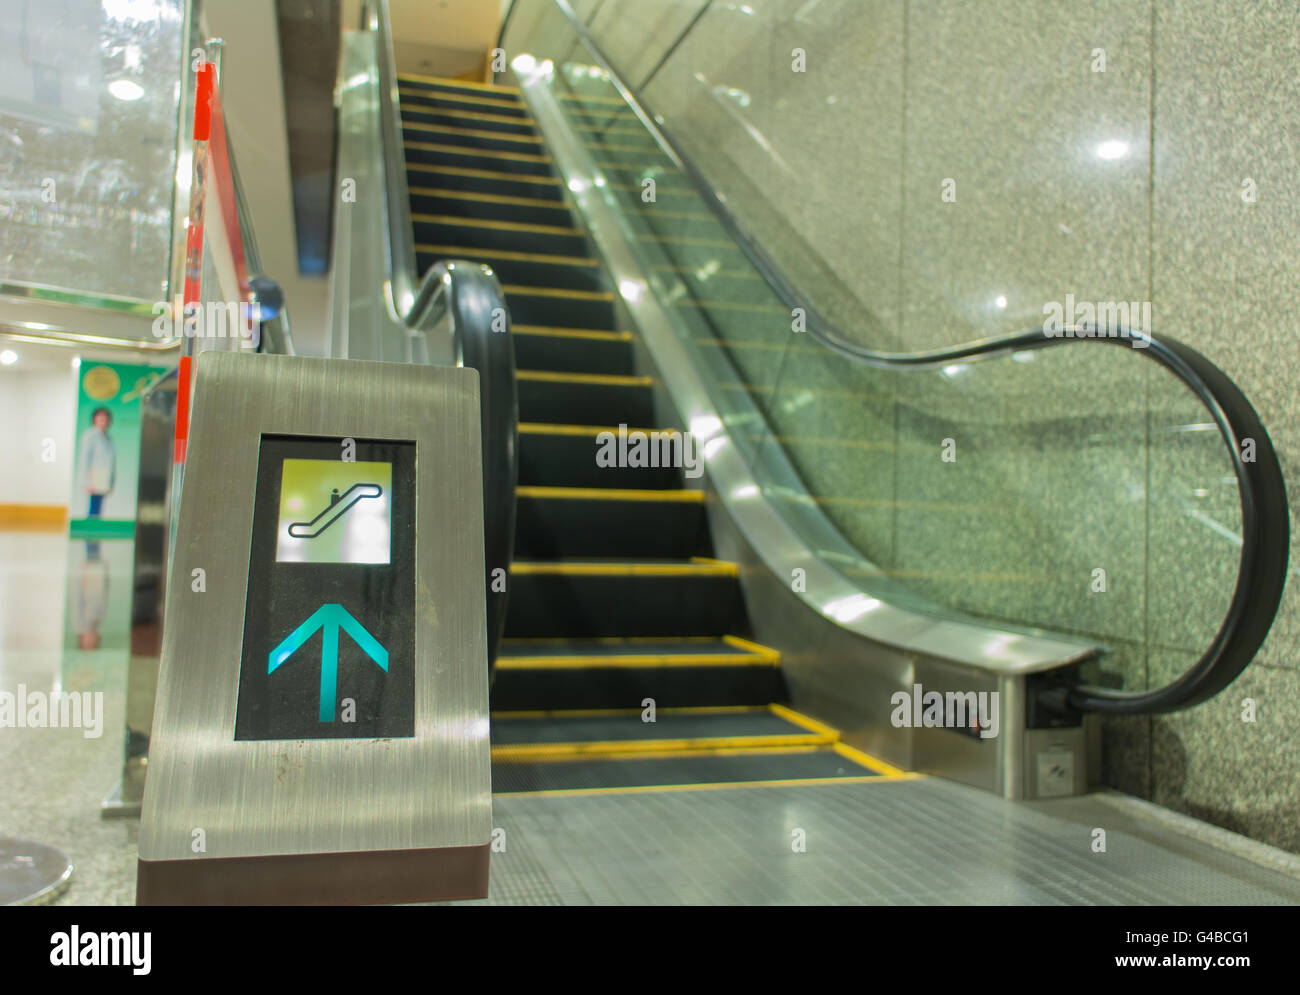 warning sign on escalator Stock Photo